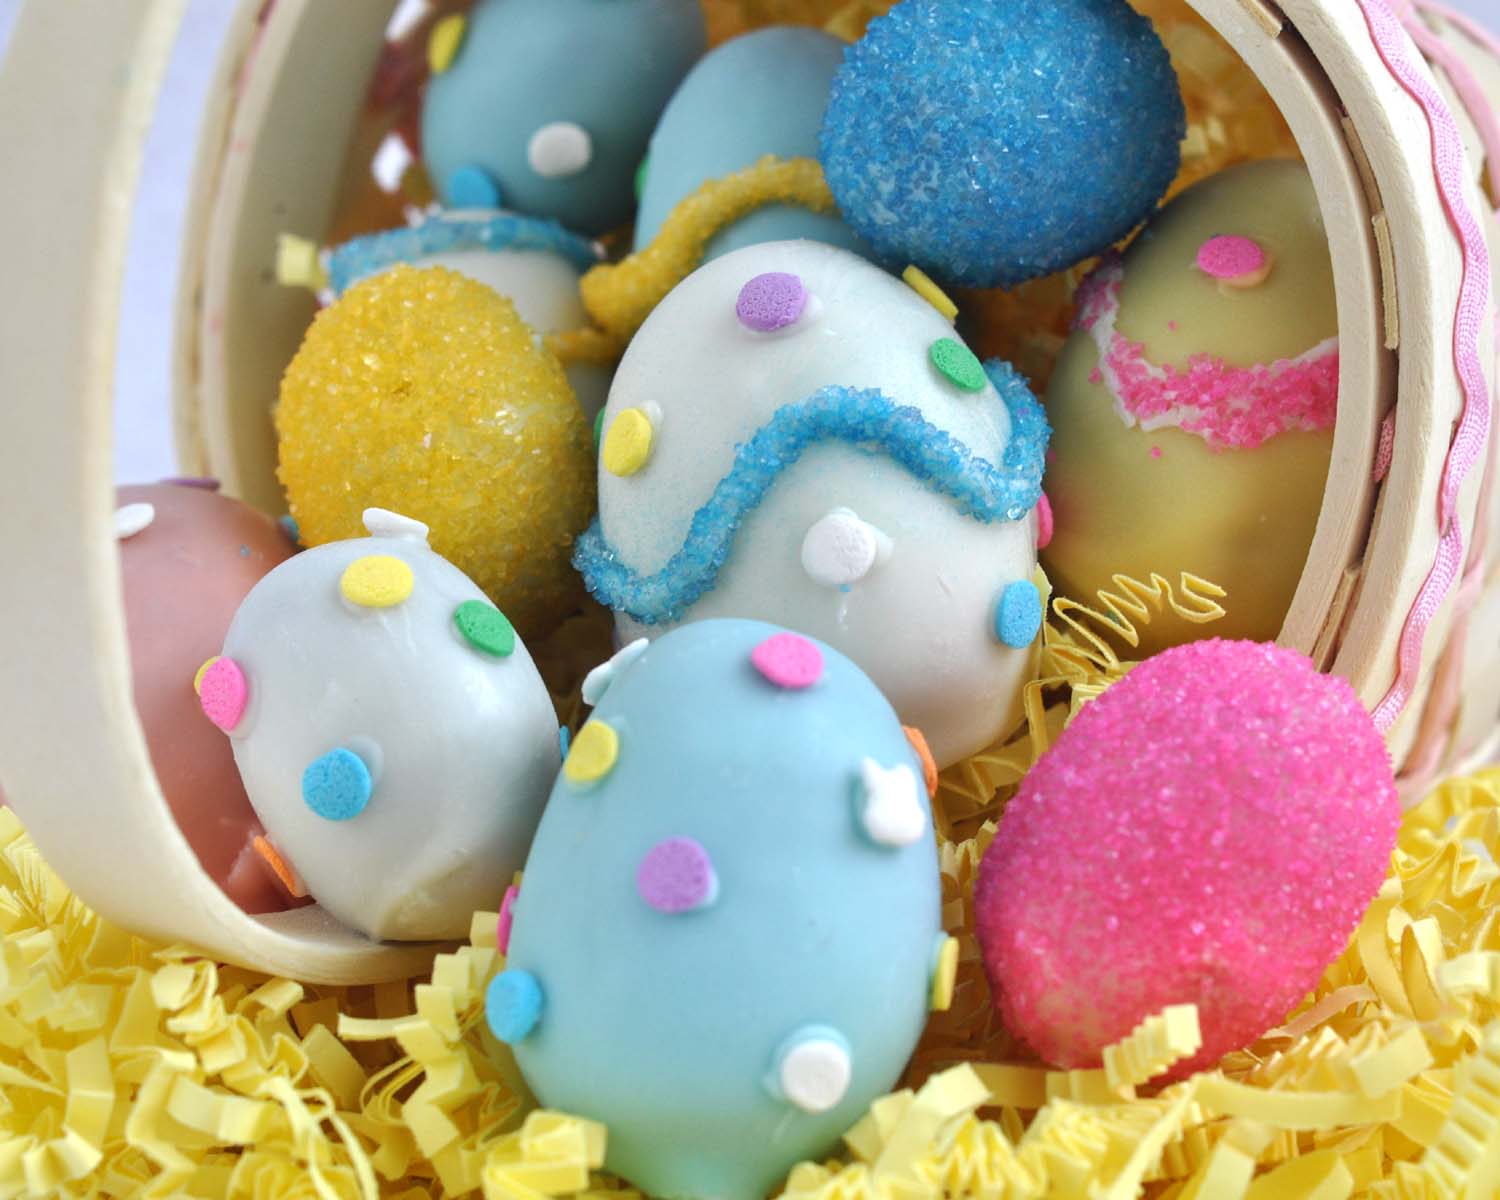 Beki Cook's Cake Blog: Special Easter Treat Ideas